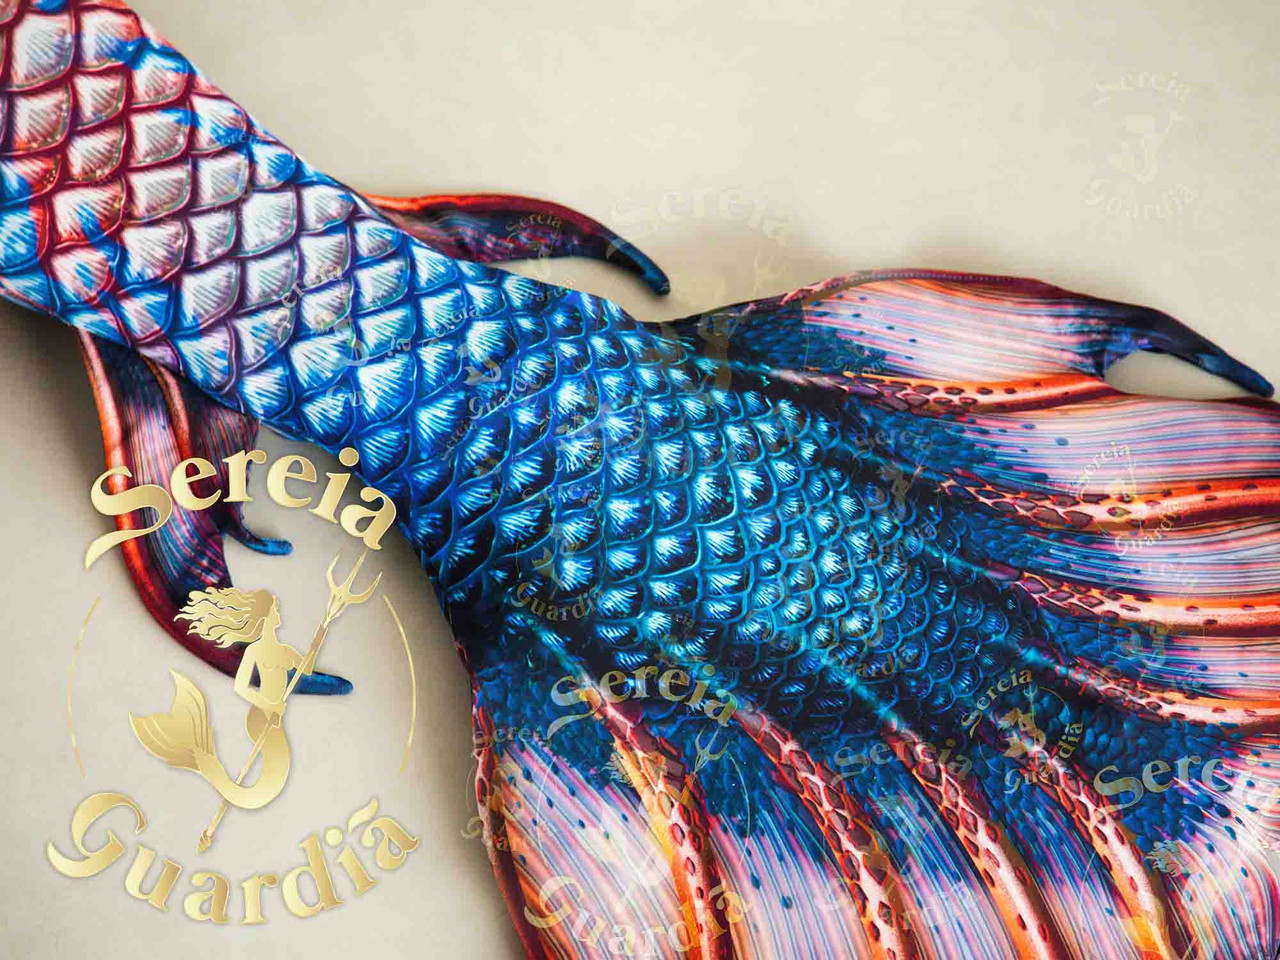 Totally Mermaids Glitter & Foil Art Set – BOX CANDIY